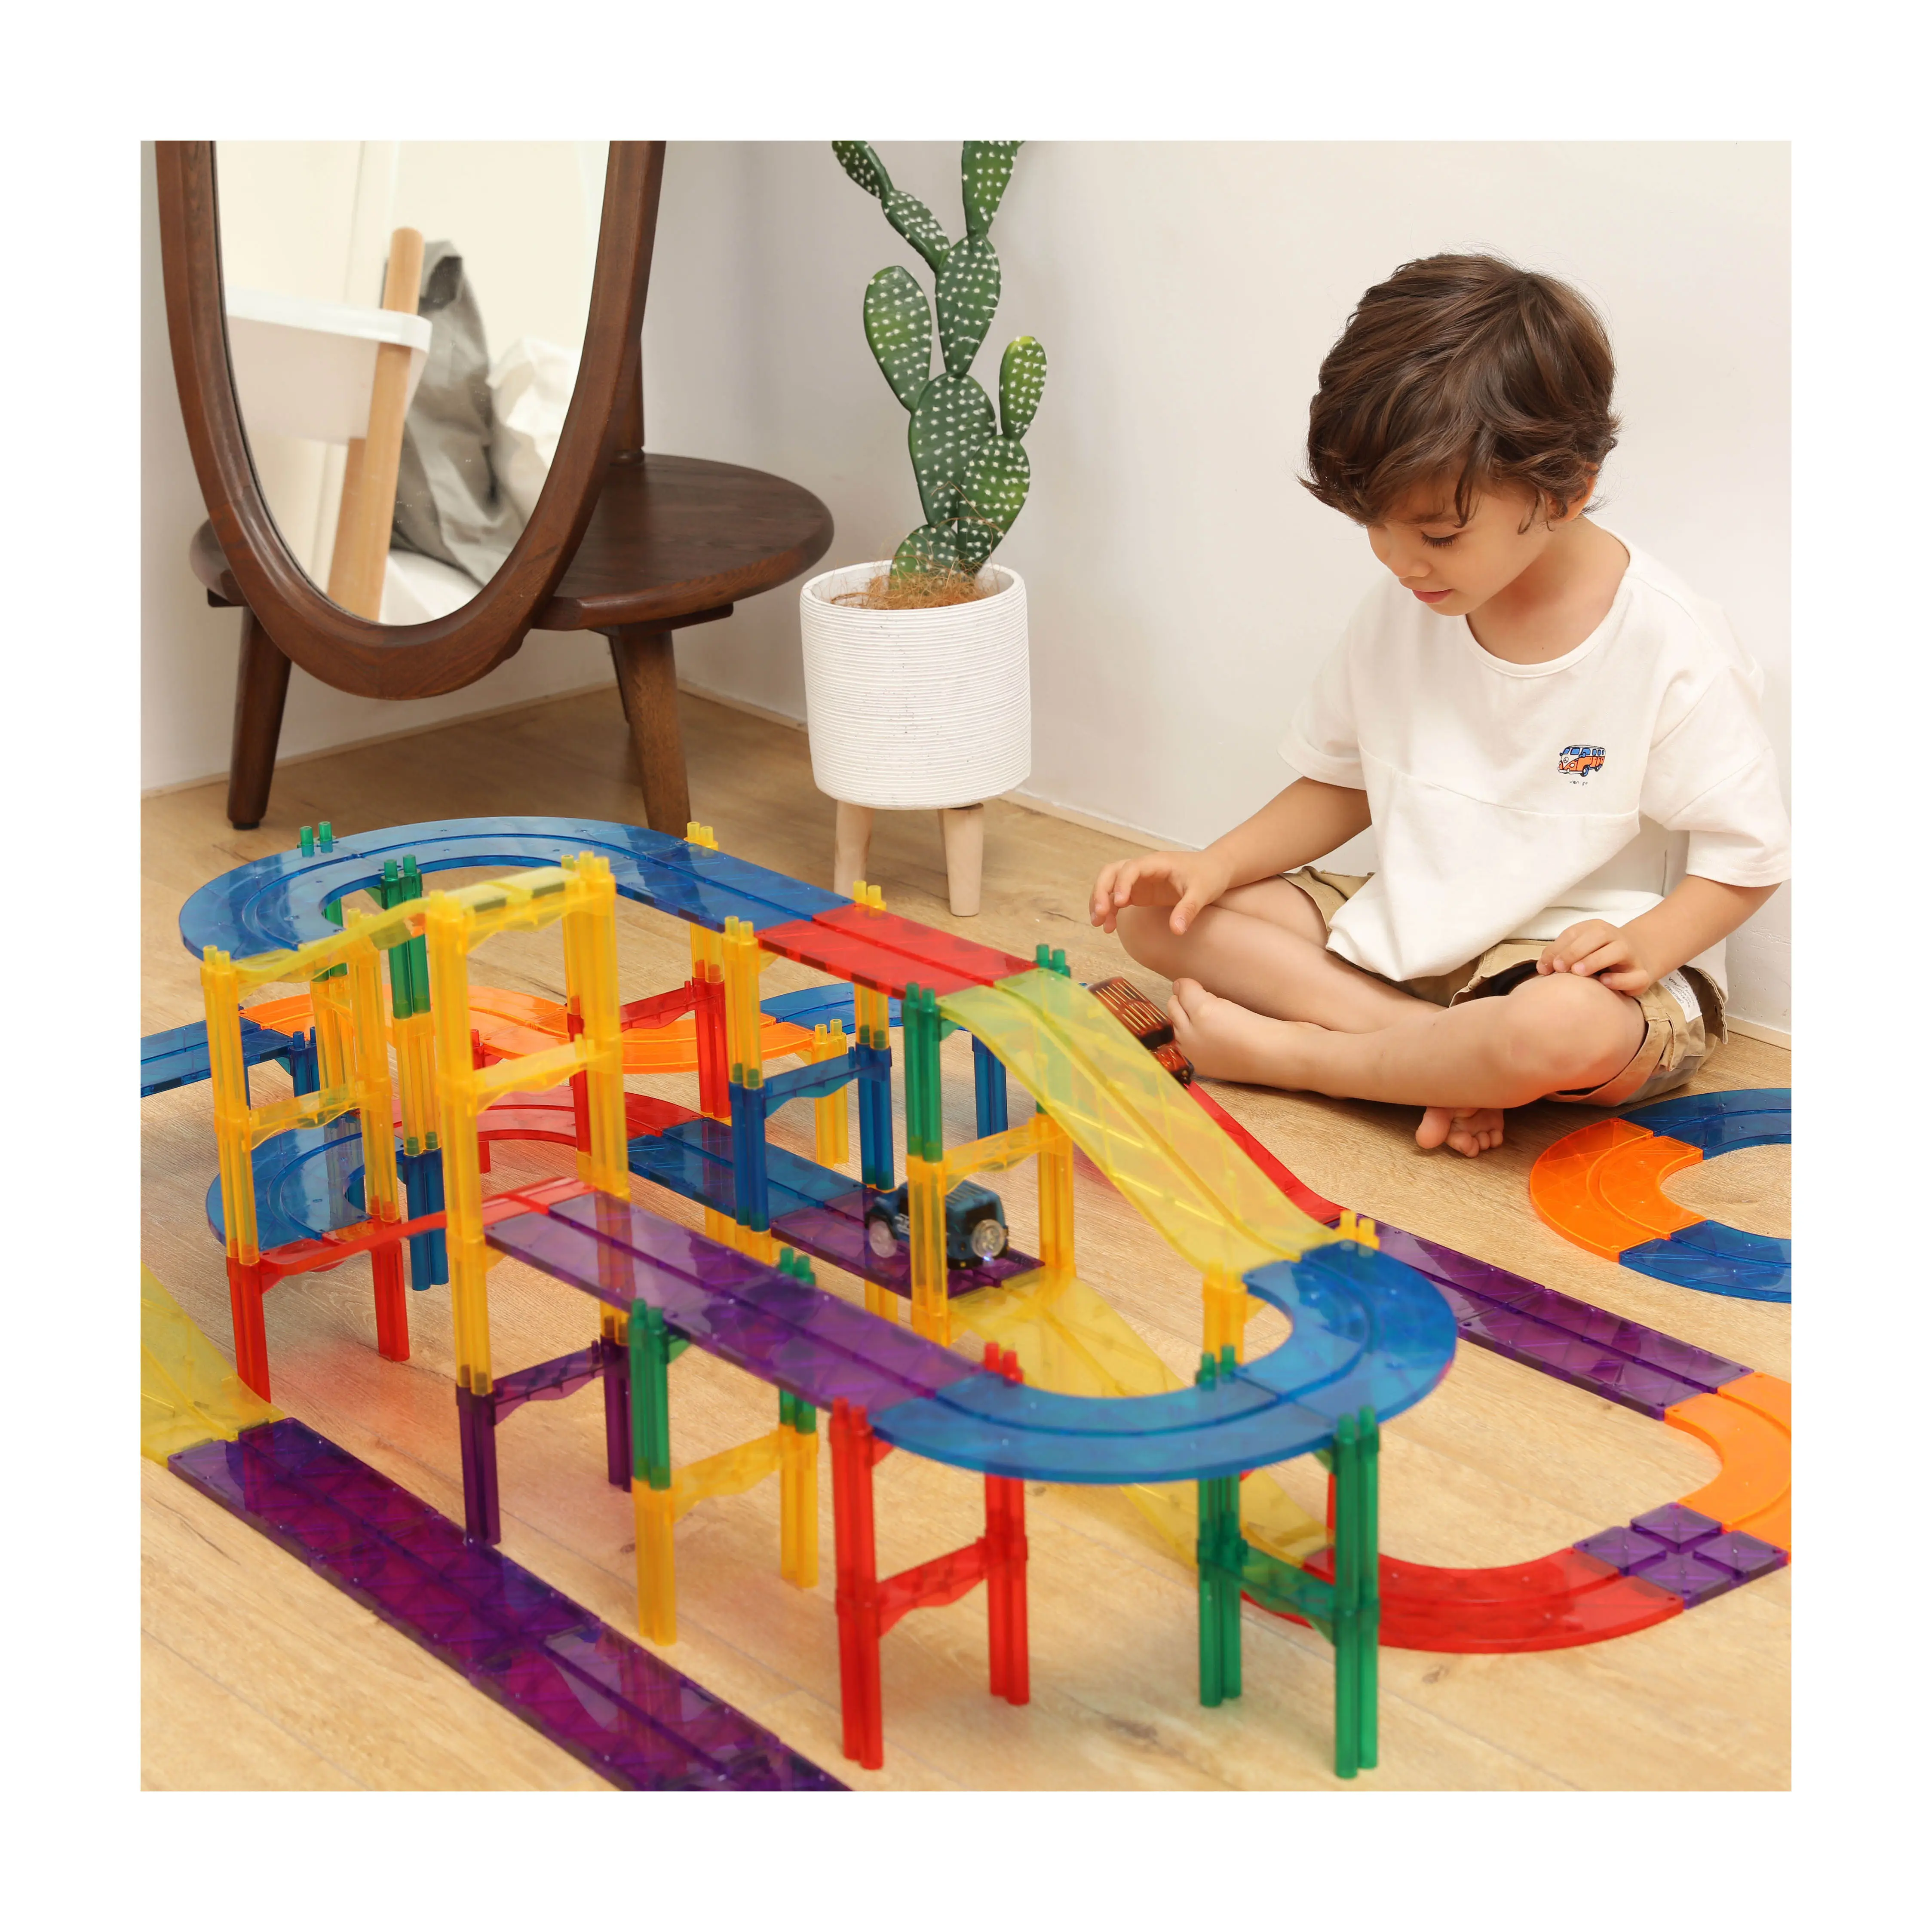 Montessori DIY 108pcs car race track magnet tiles toys building educational toys for kids EN71, ASTM, CPSC